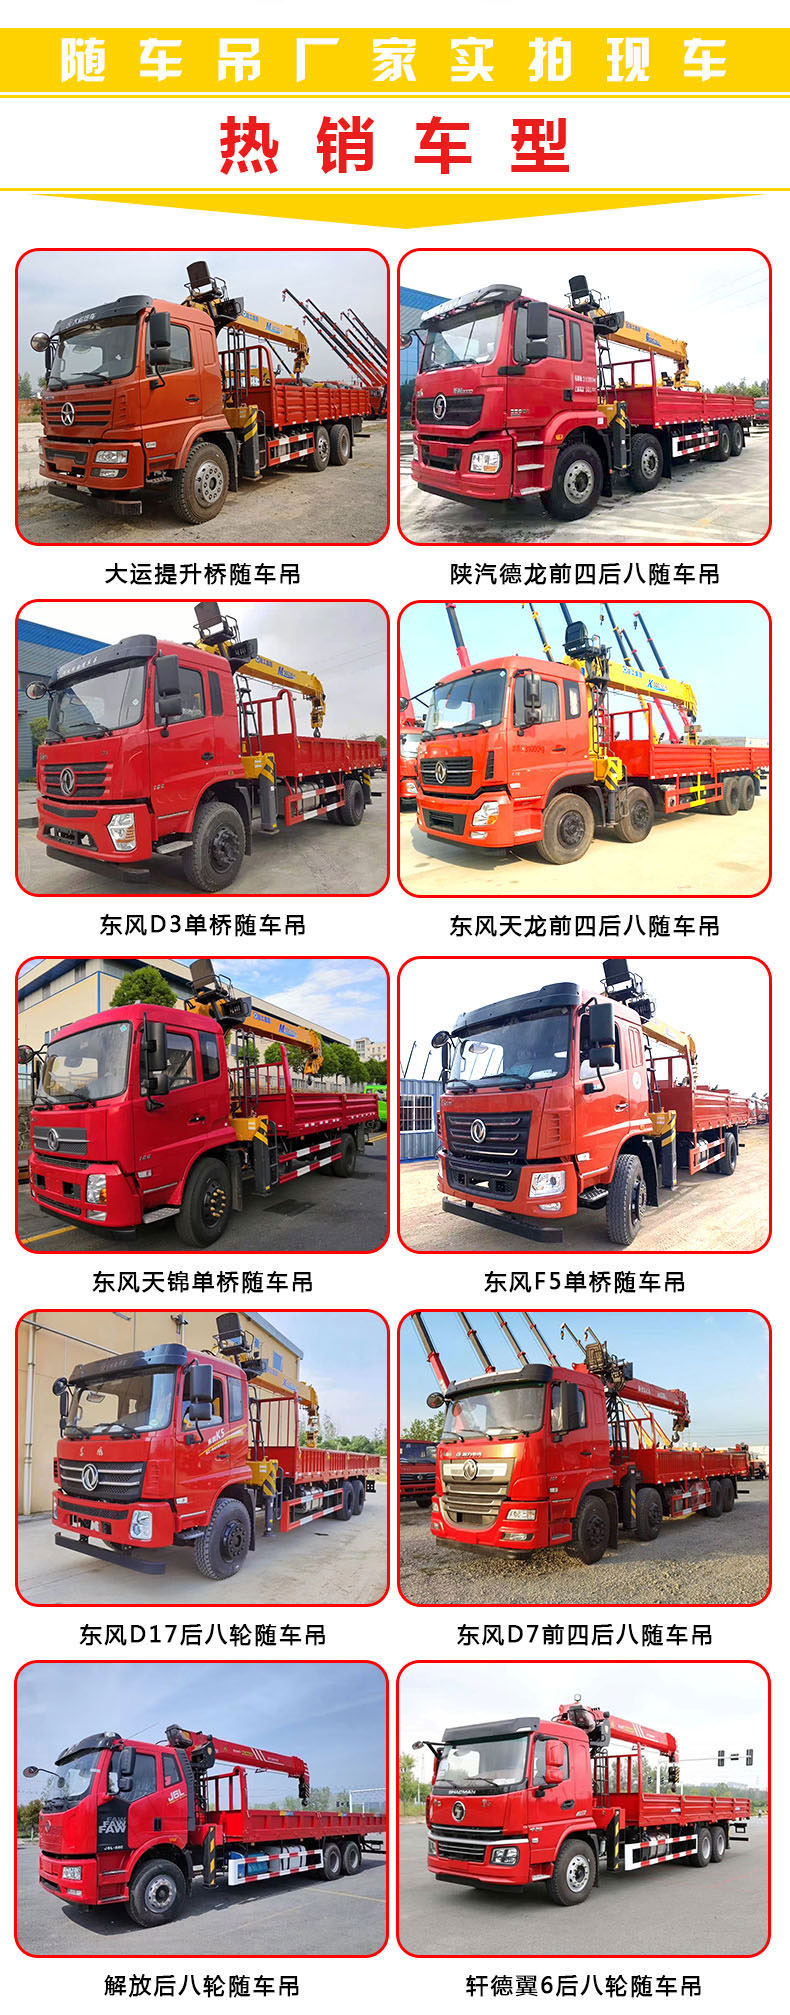 Shaanxi Automobile Delong Tractor Truck mounted Crane Weichai 460 horsepower Hongchang Tianma folding arm 35 ton 9-section boom crane